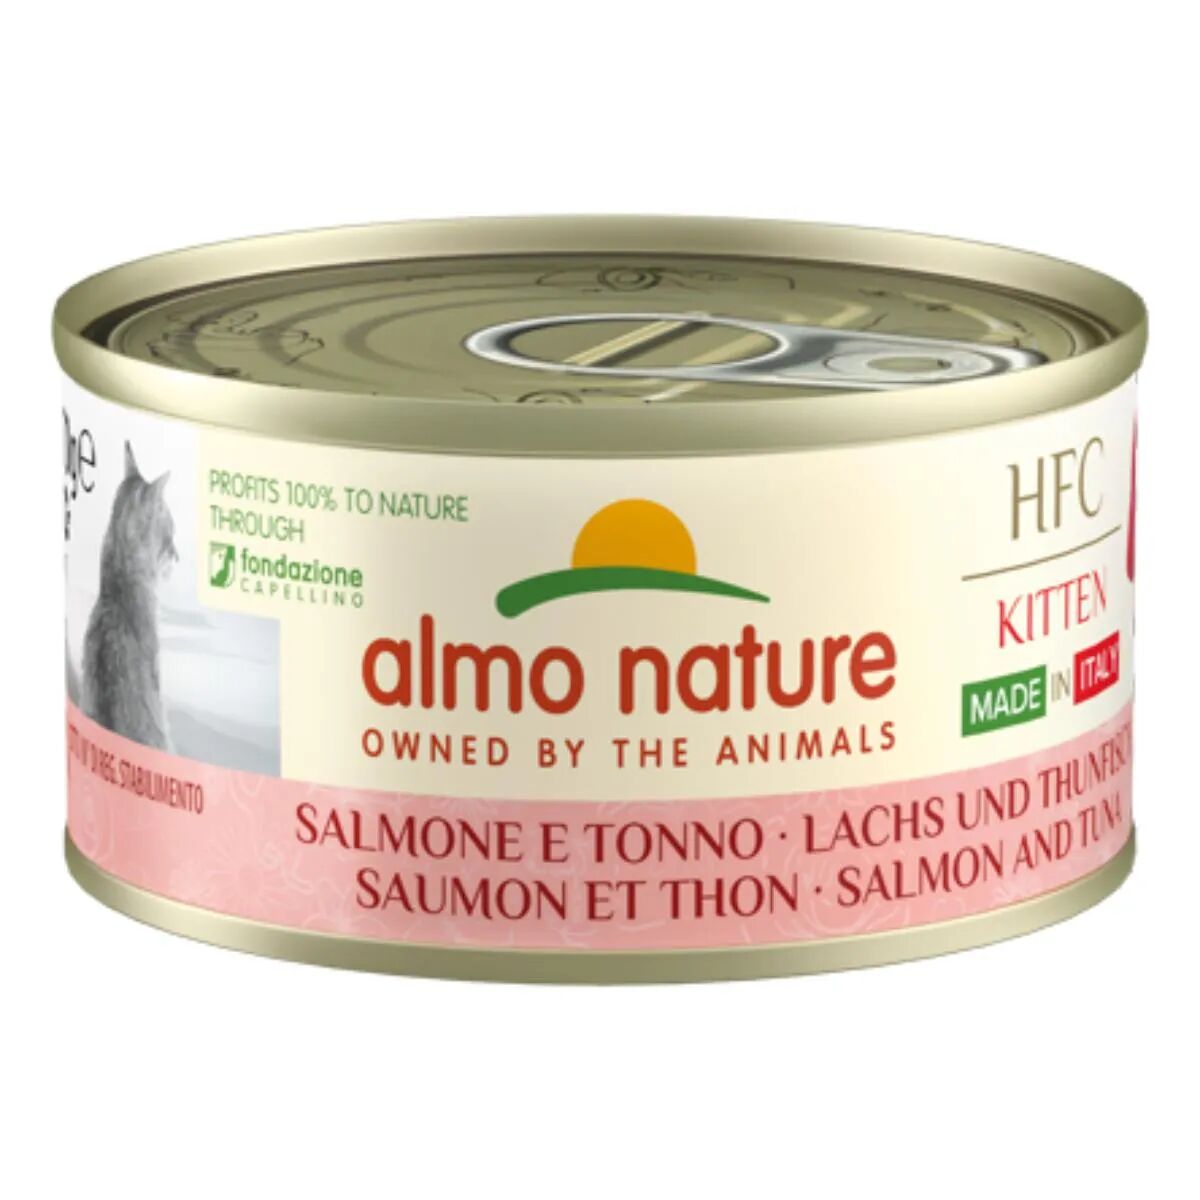 almo nature hfc kitten made in italy lattina multipack 24x70g salmone e tonno